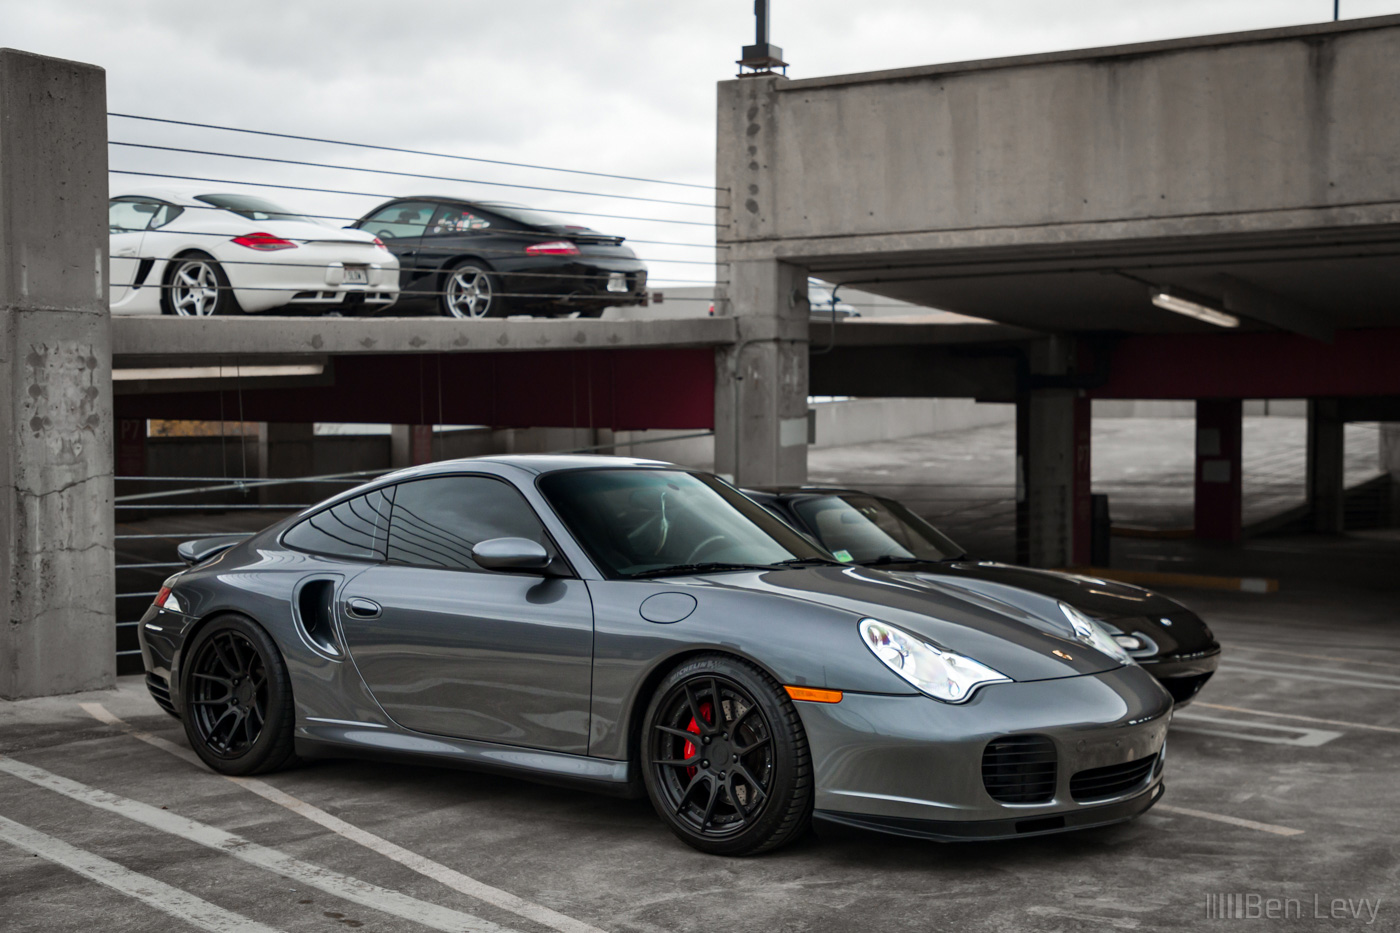 Grey Porsche 911 Turbo at Lincoln Common Parking Garage